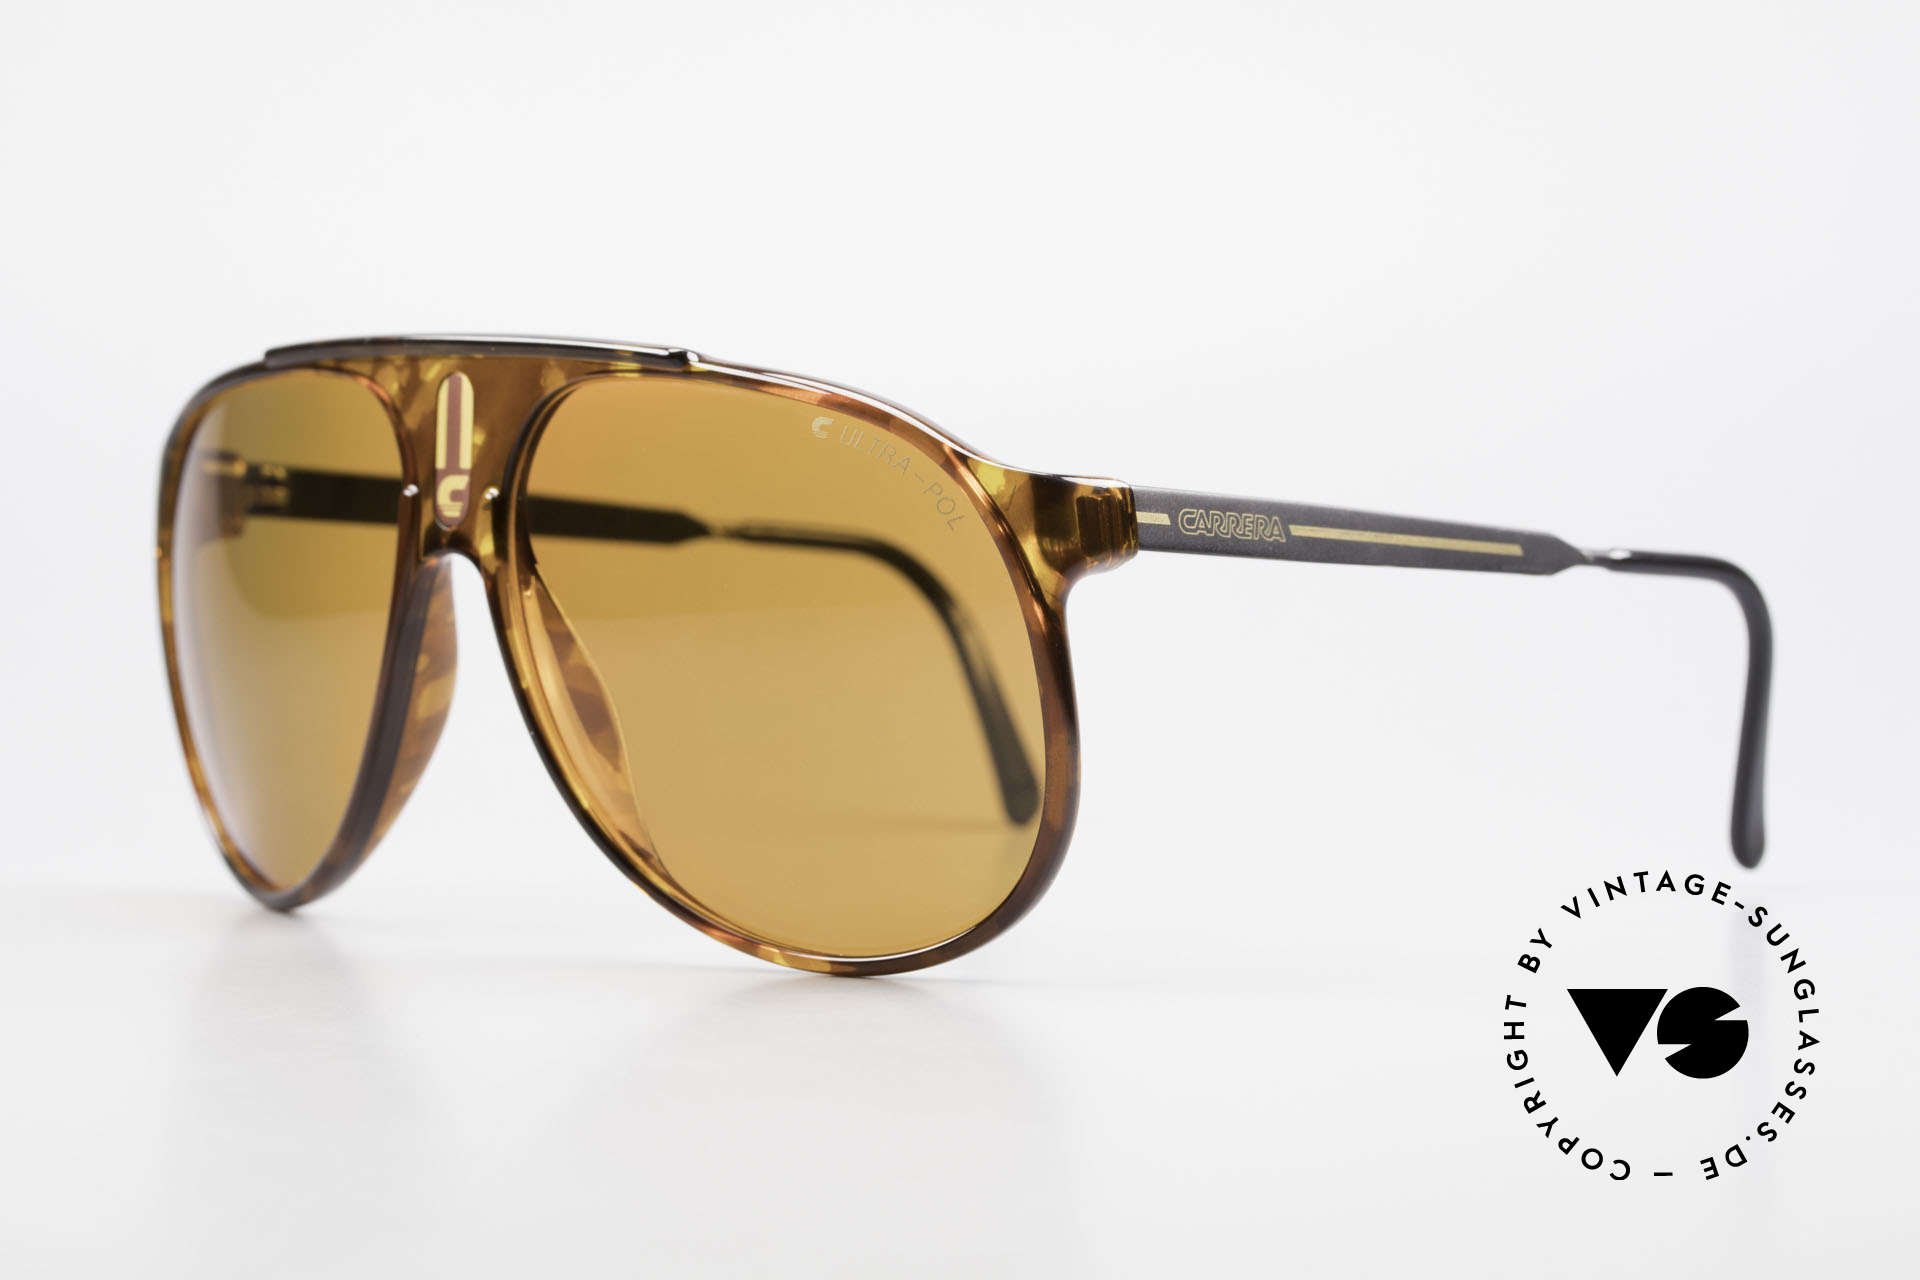 Carrera 5424 80's Sunglasses Polarized Lens, combination of "Sport Performance" & aviator style, Made for Men